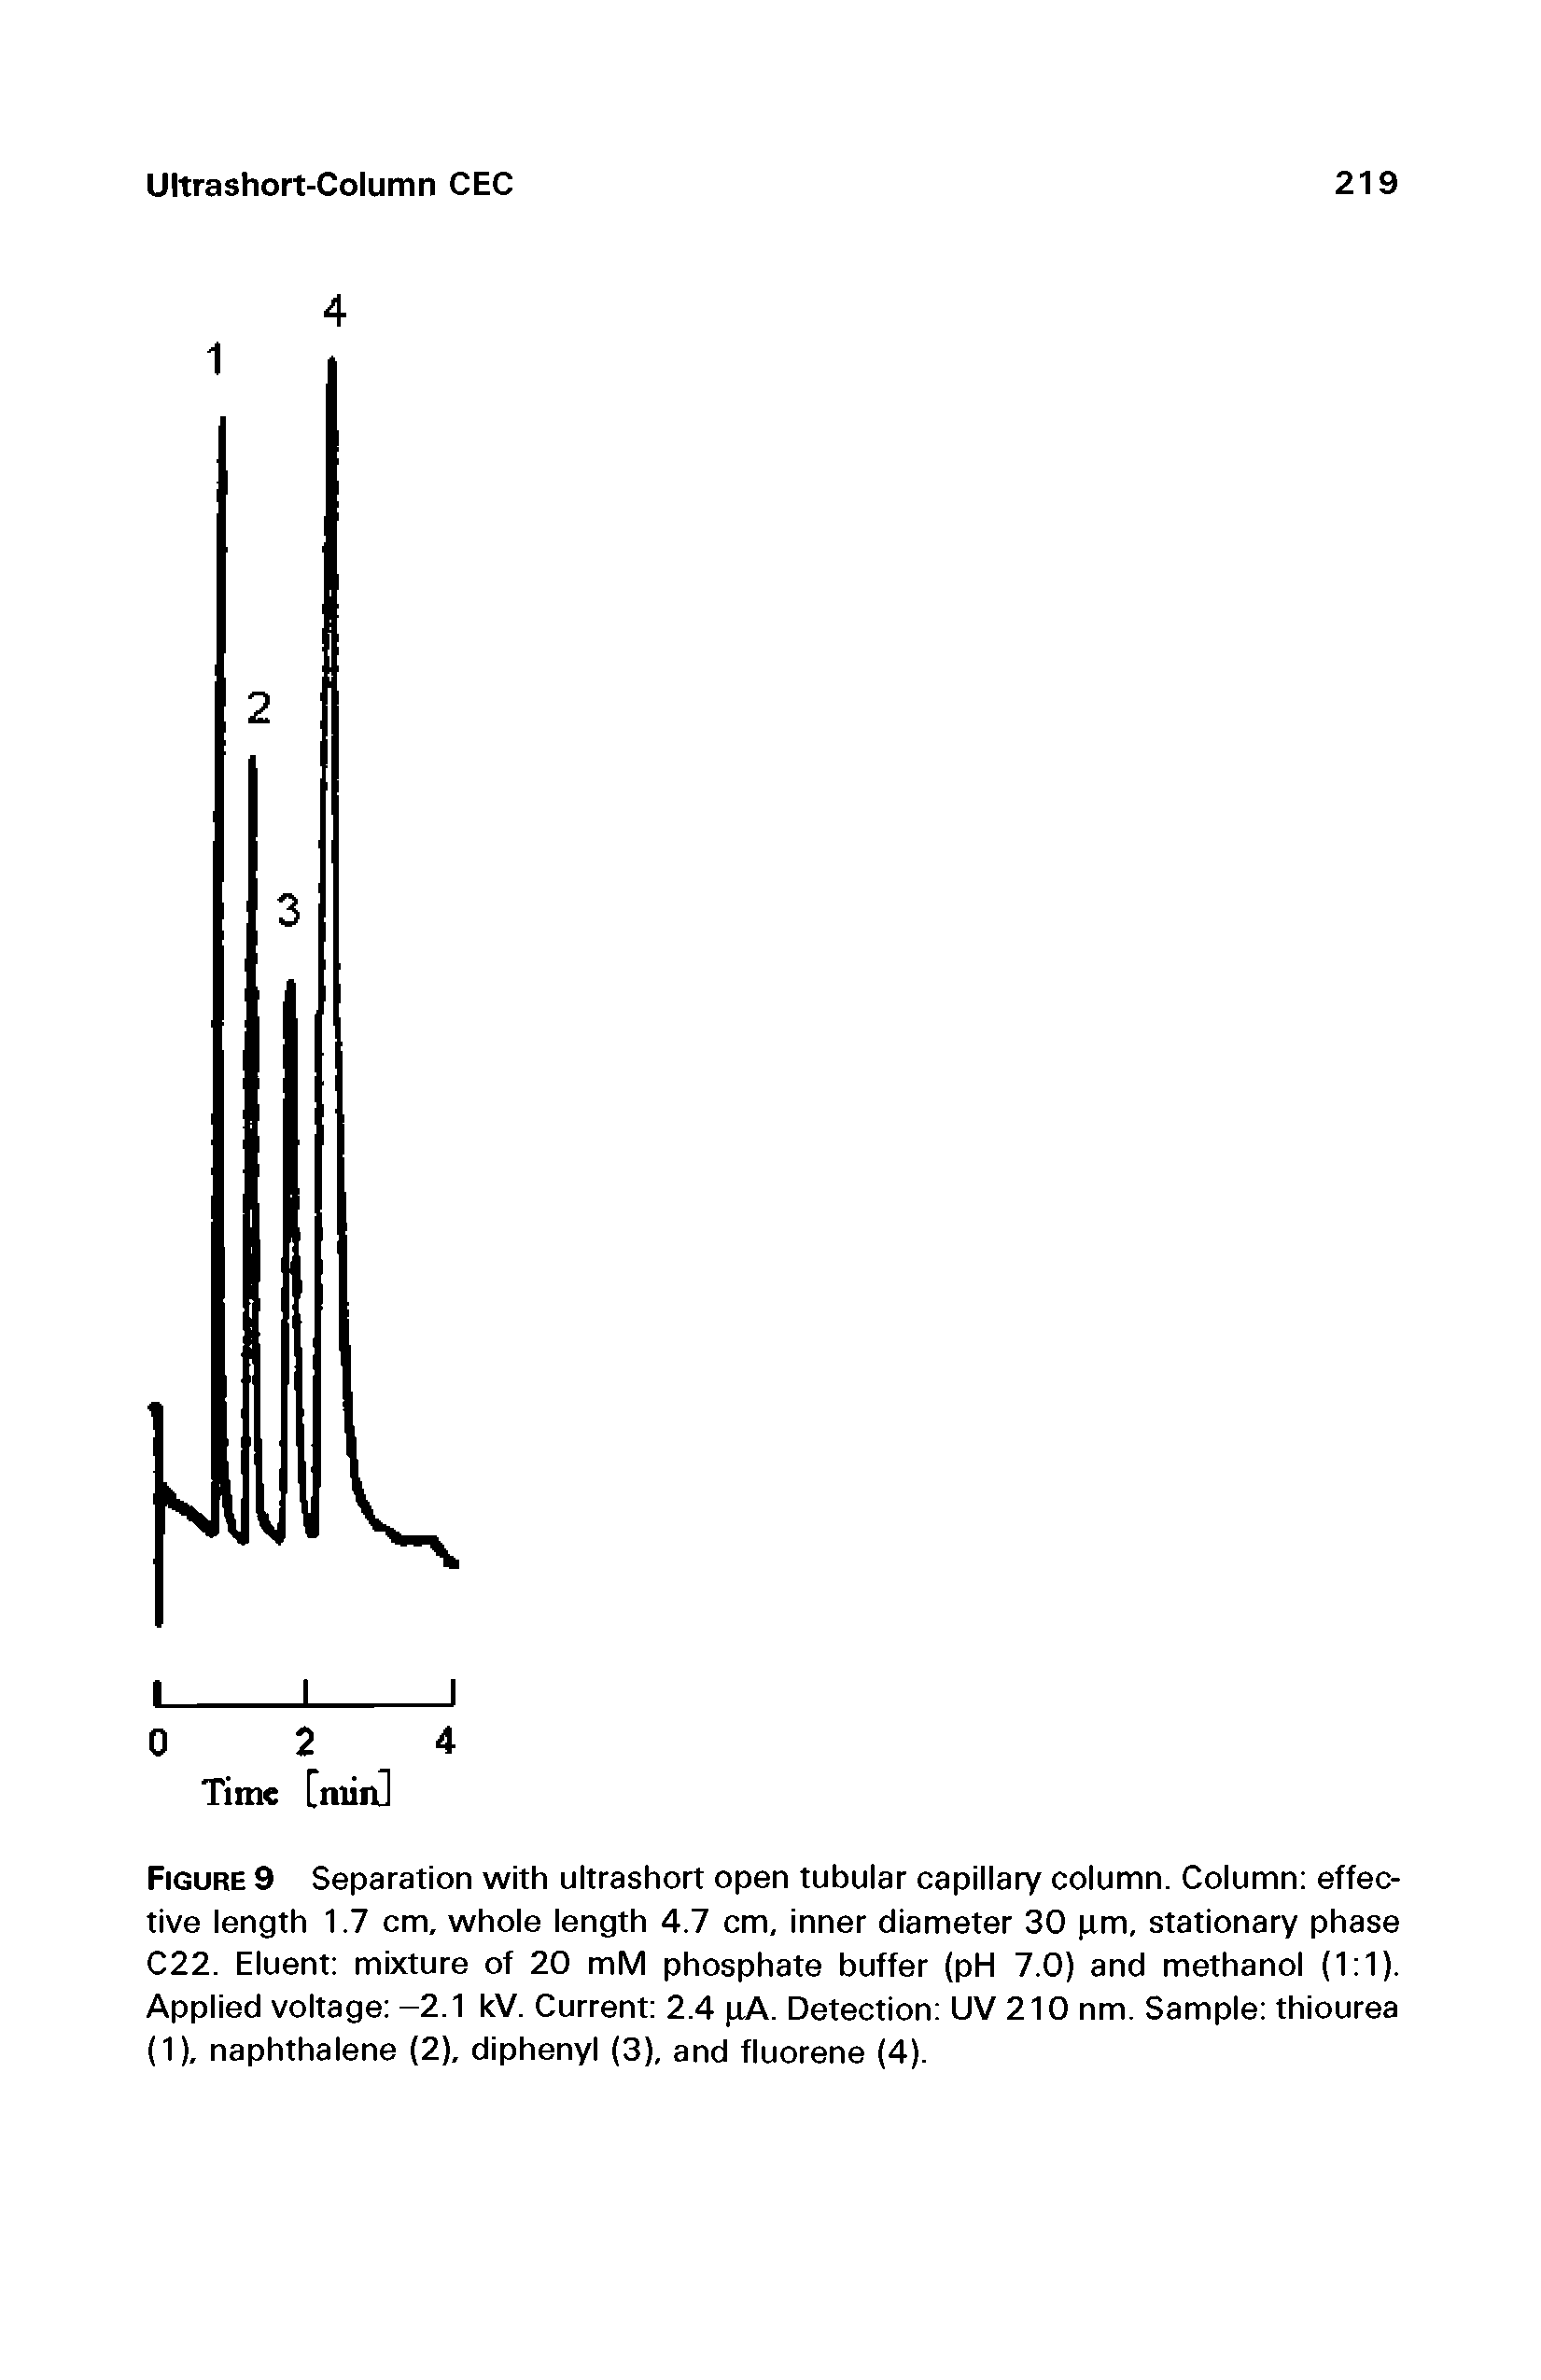 Figure 9 Separation with ultrashort open tubular capillary column. Column effective length 1.7 cm, whole length 4.7 cm, inner diameter 30 pm, stationary phase C22. Eluent mixture of 20 mM phosphate buffer (pH 7.0) and methanol (1 1). Applied voltage -2.1 kV. Current 2.4 pA. Detection UV 210 nm. Sample thiourea (1), naphthalene (2), diphenyl (3), and fluorene (4).